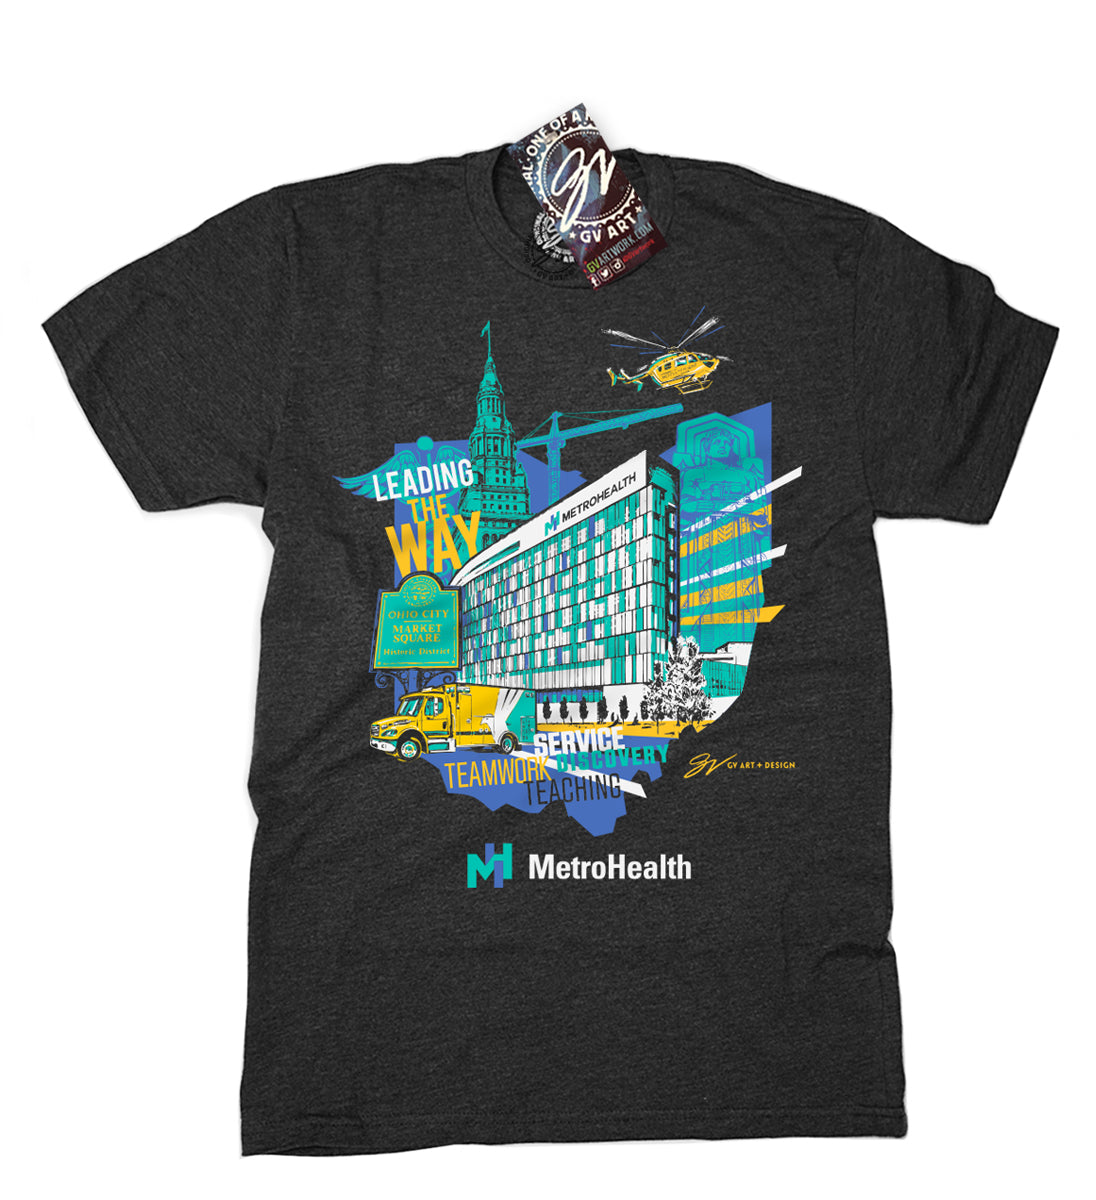 Metro Health "Leading The Way" Custom T Shirt